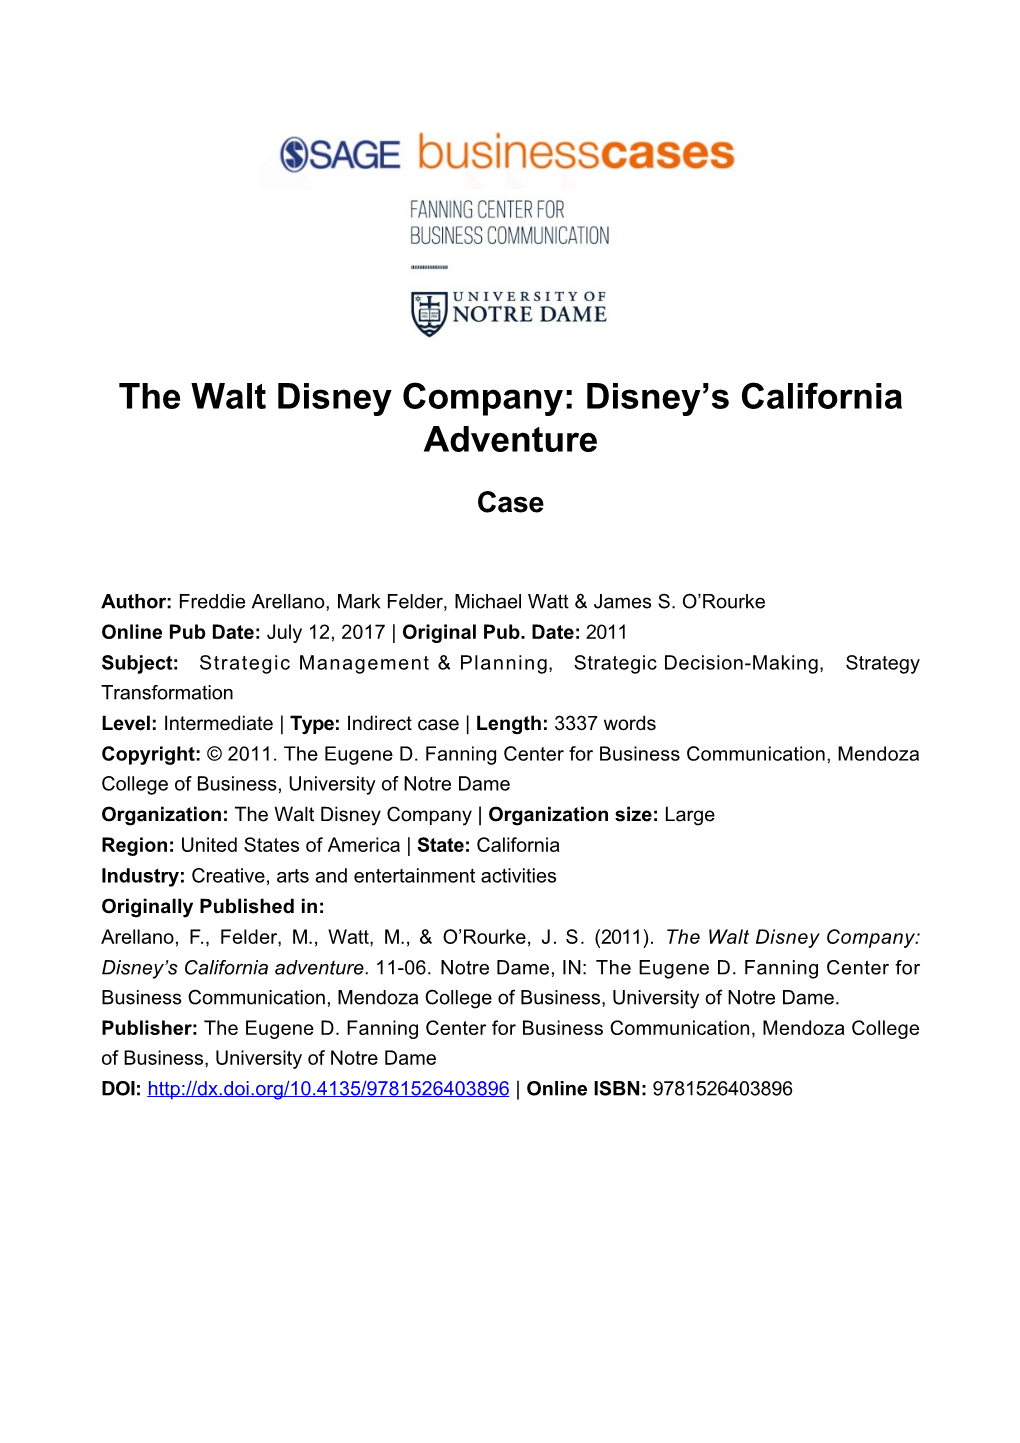 The Walt Disney Company: Disney's California Adventure